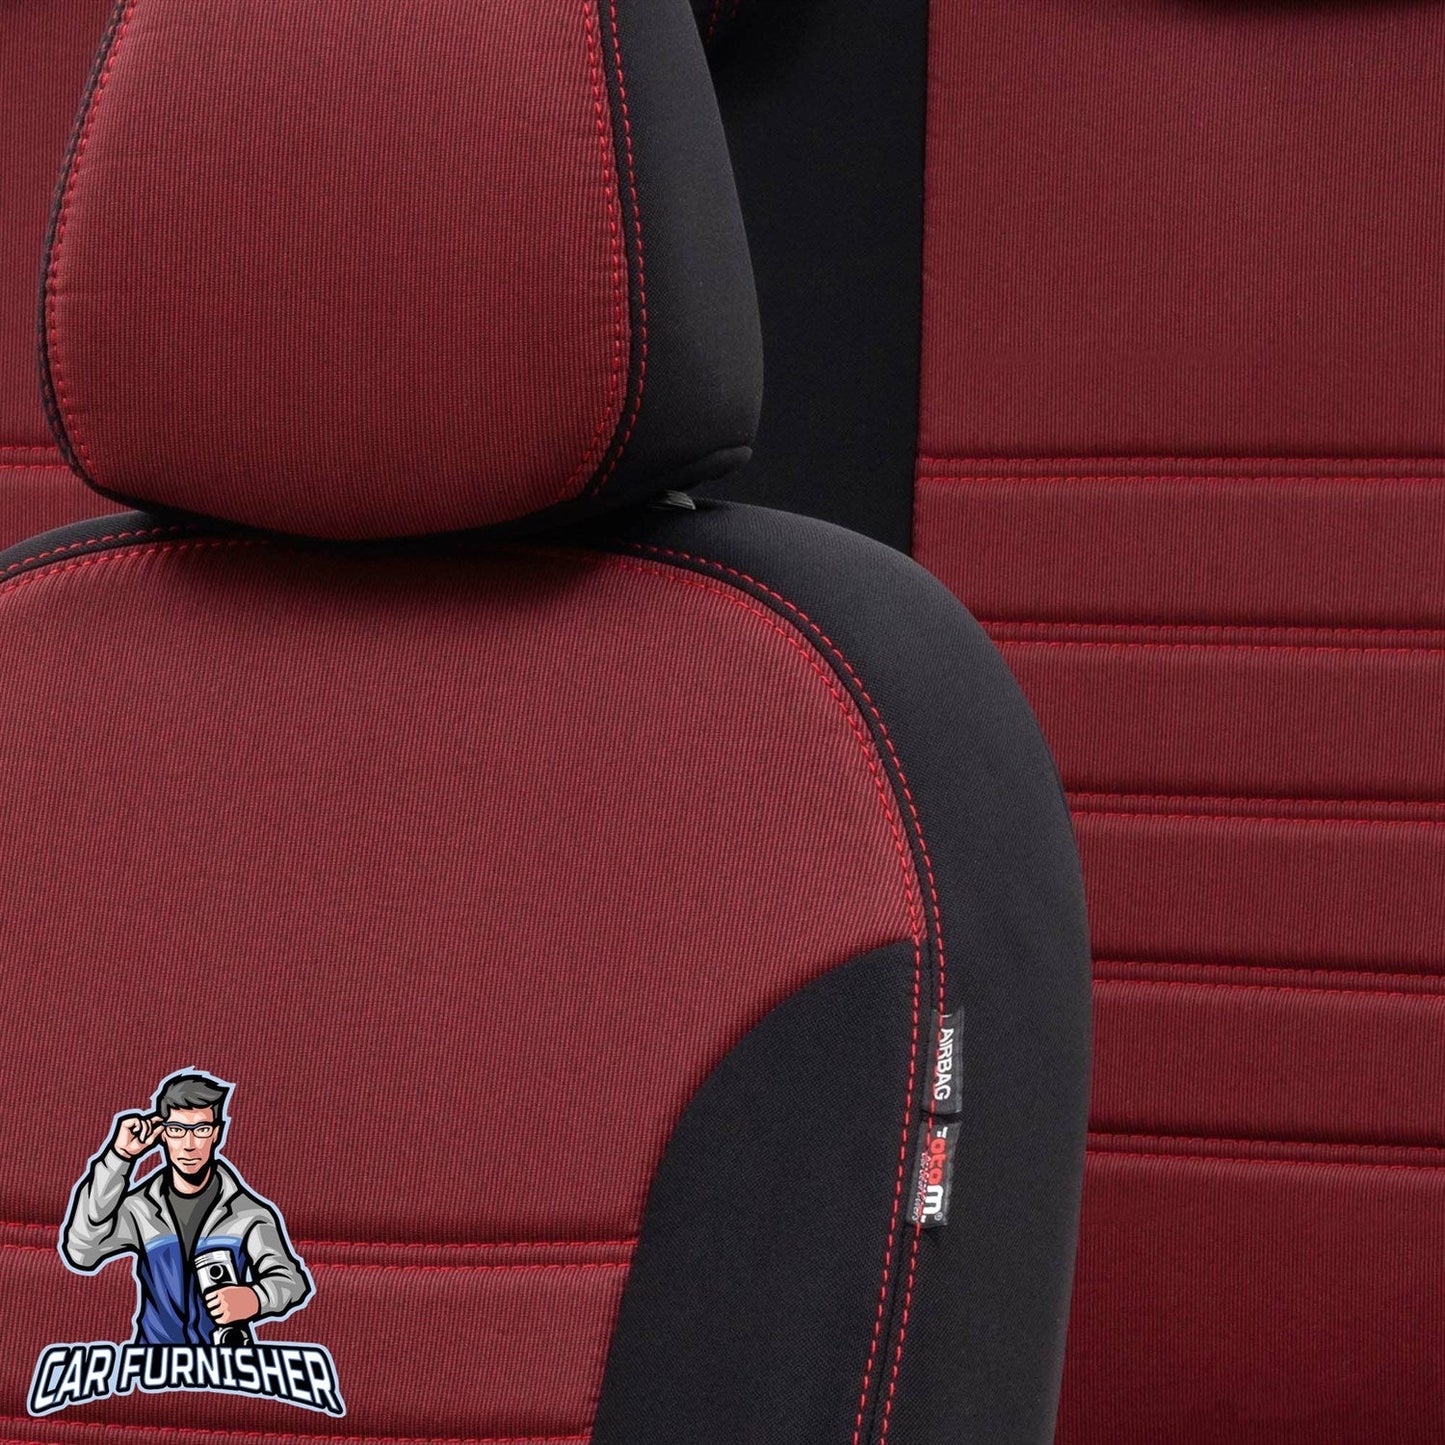 Mercedes GLC Class Seat Covers Original Jacquard Design Red Jacquard Fabric